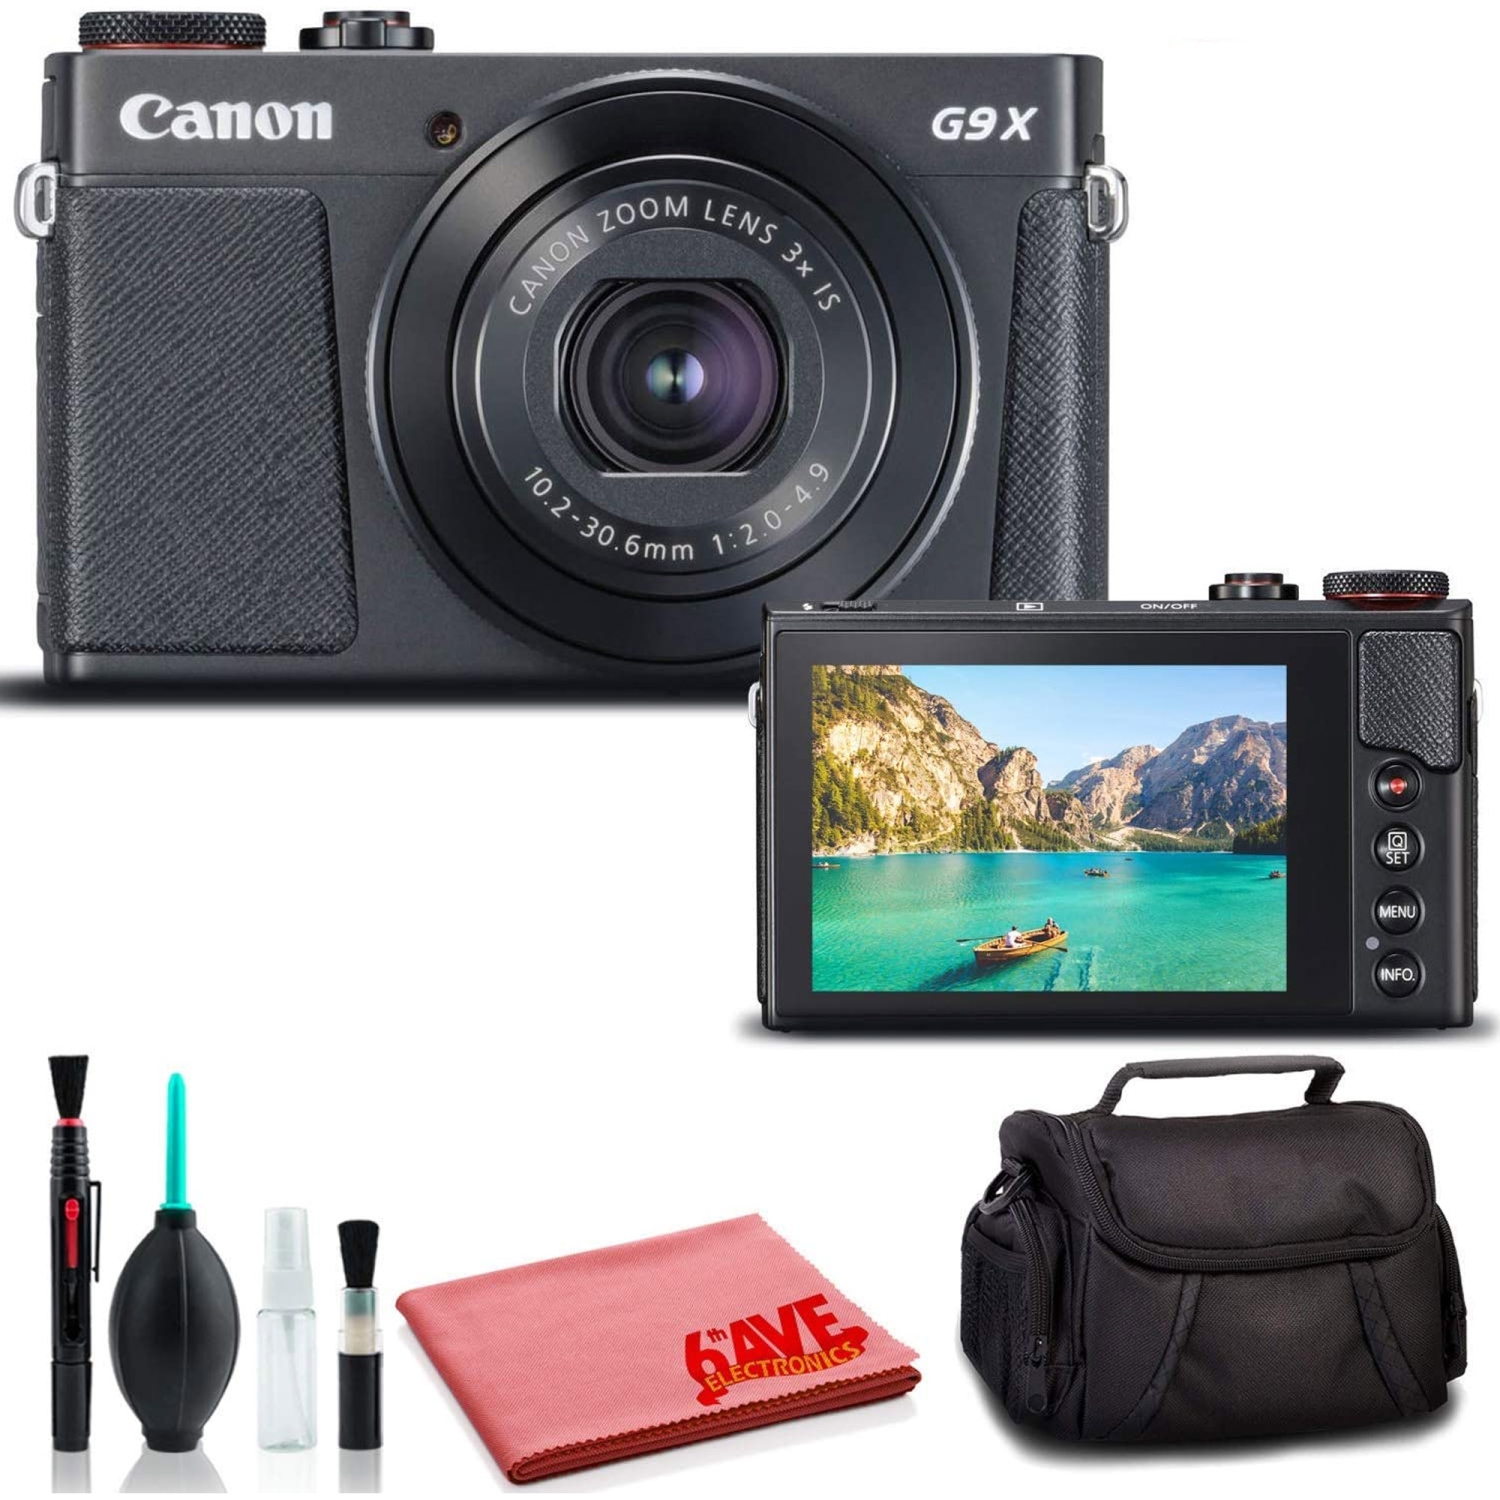 Canon PowerShot G9 X Mark II Digital Camera (Black) (International Model) - Deluxe Kit